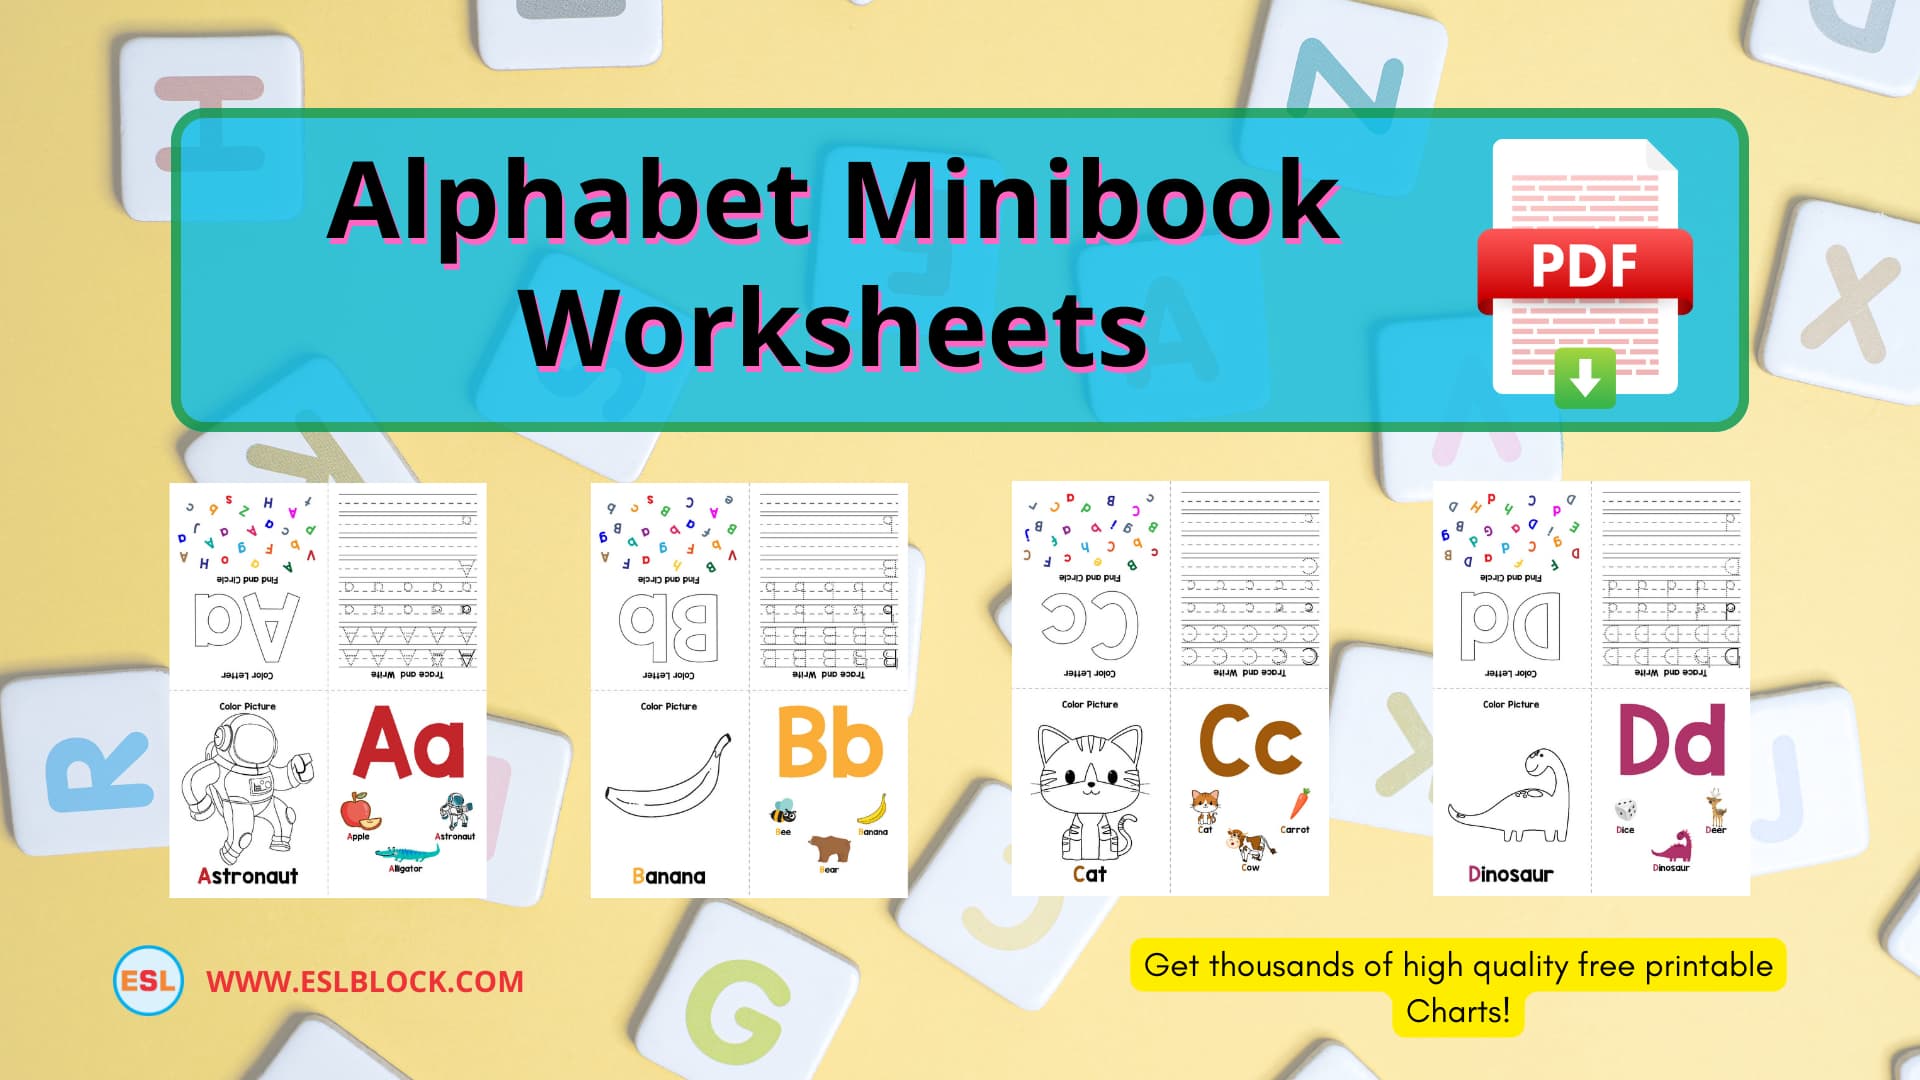 Alphabet Minibook Worksheets